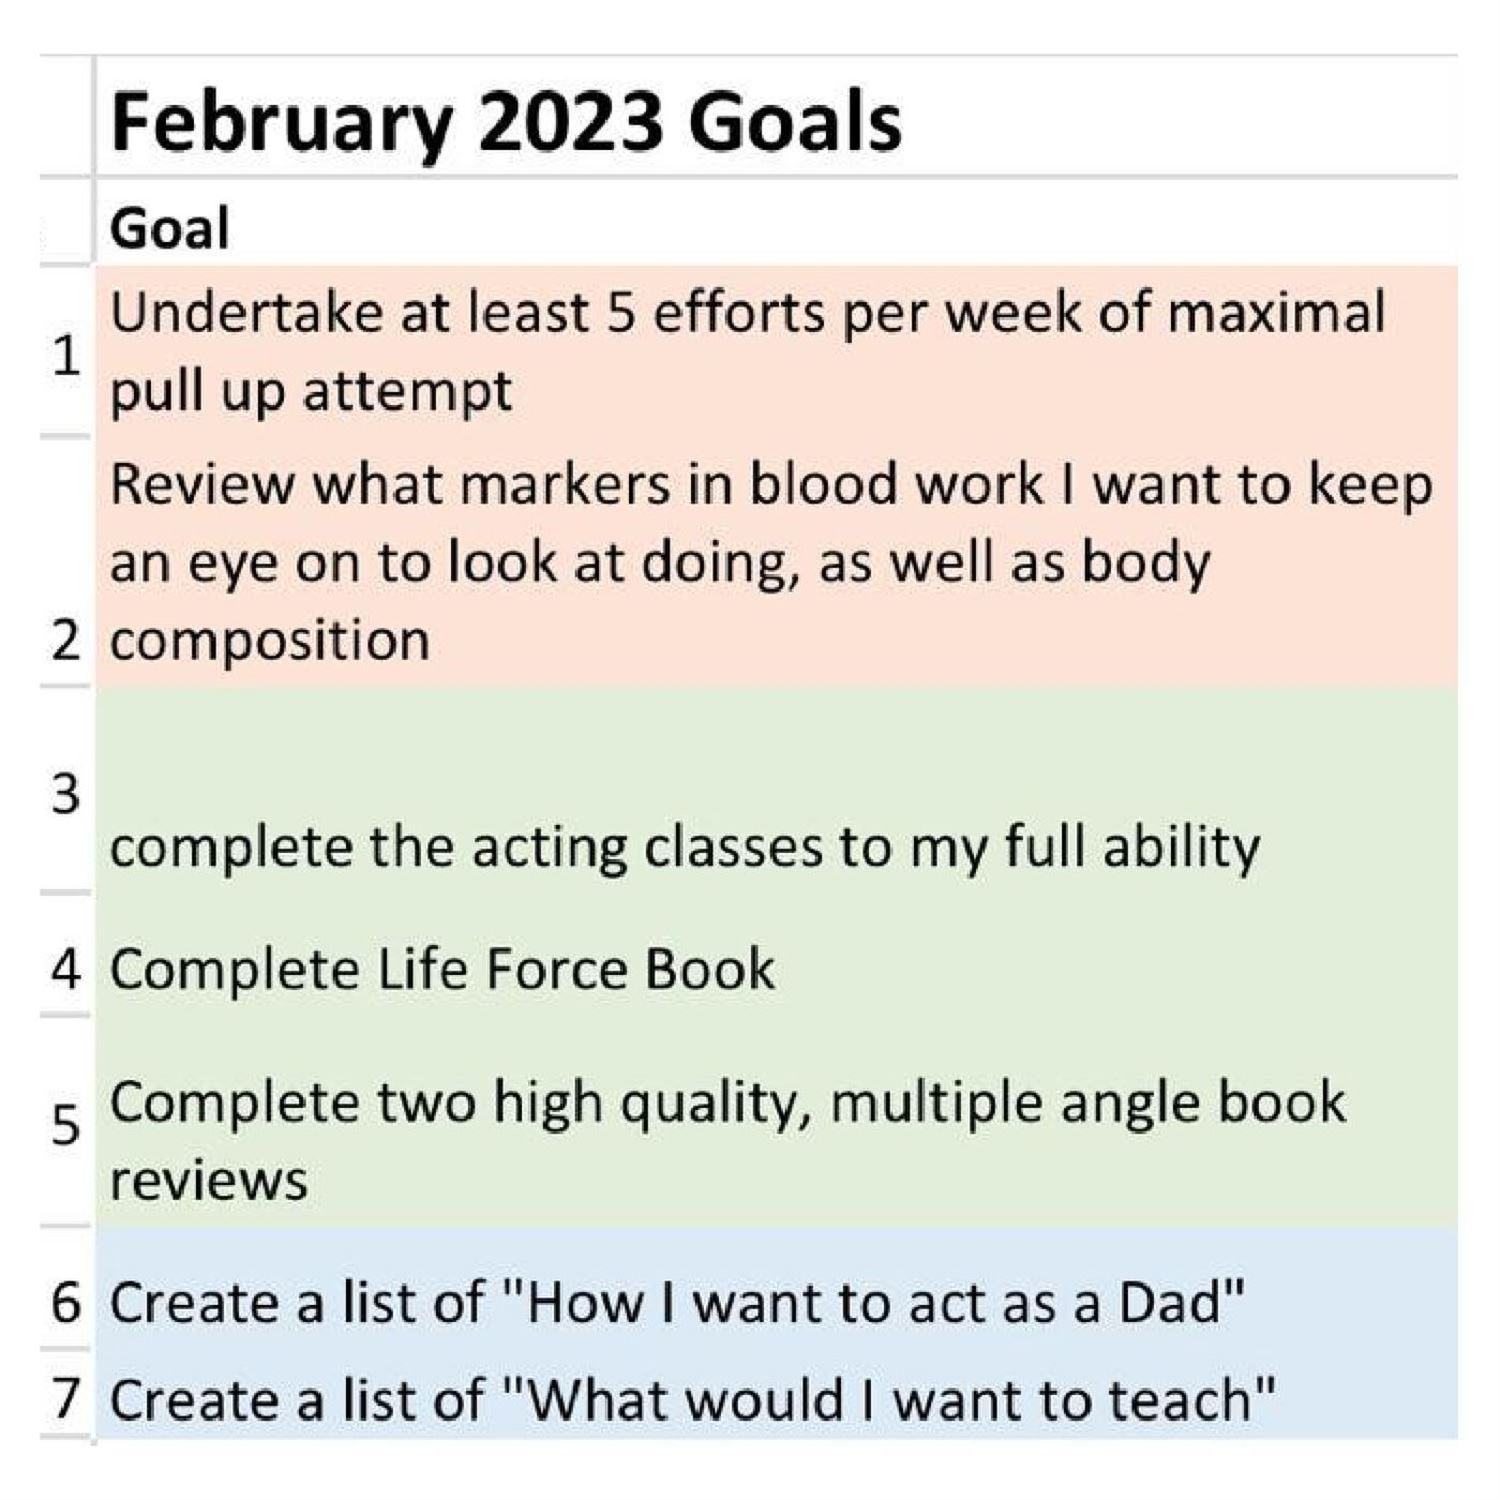 Juan's February Goals